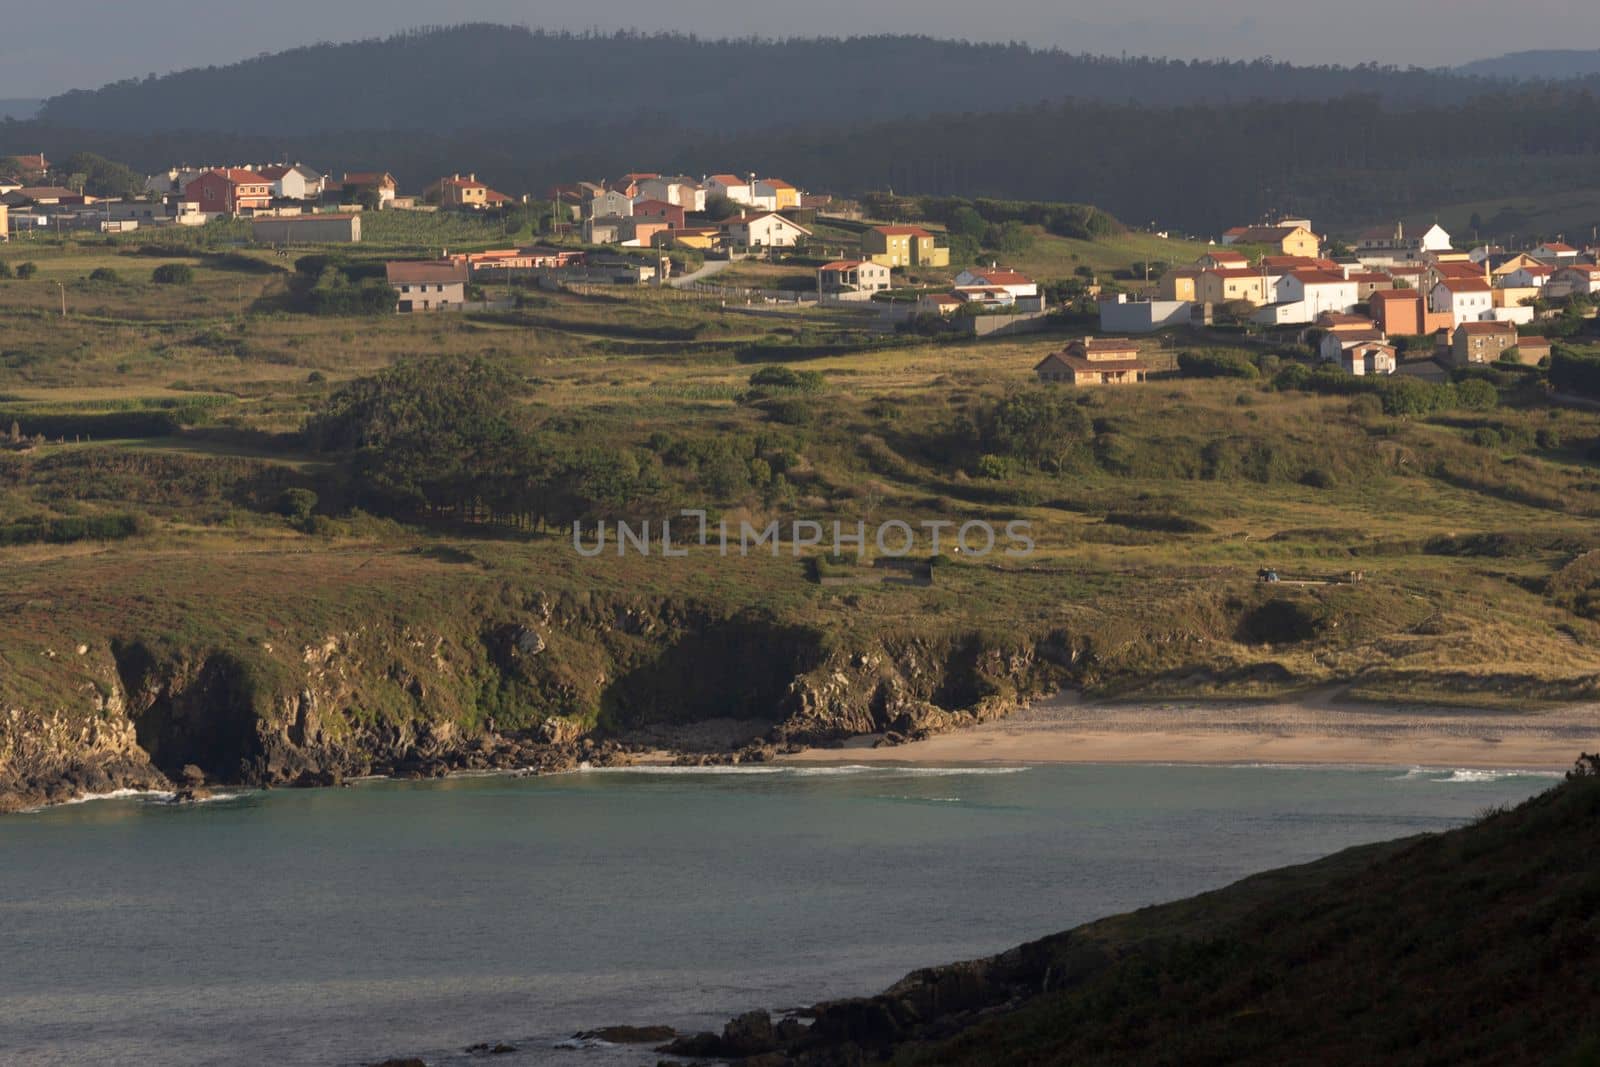 Seaia beach in Malpica de Bergantinos, Galicia, province of A Coruna. High quality photo